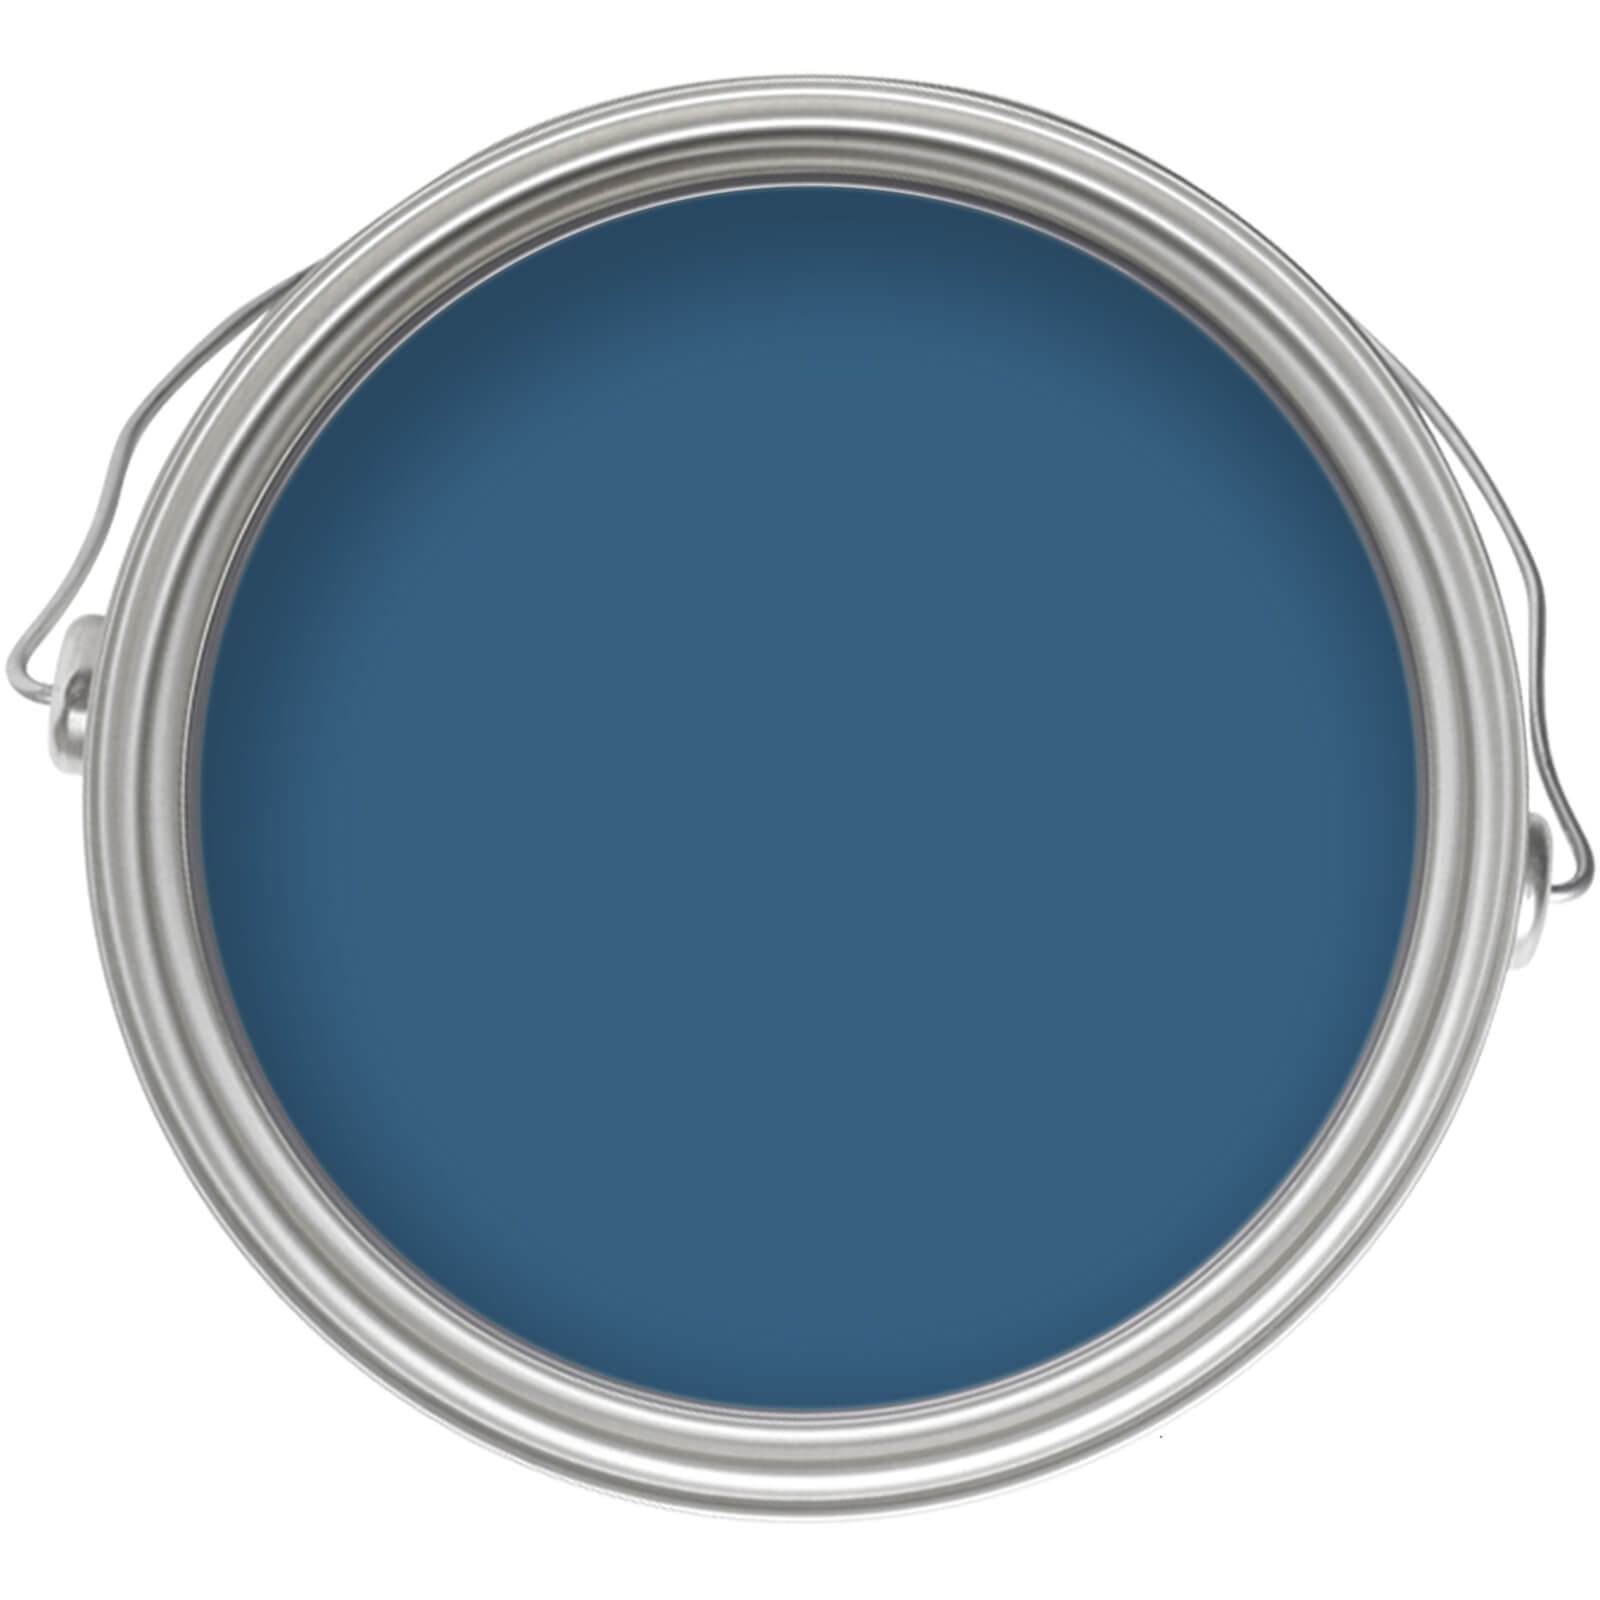 Homebase Exterior Gloss Paint - Blue Grotto 750ml